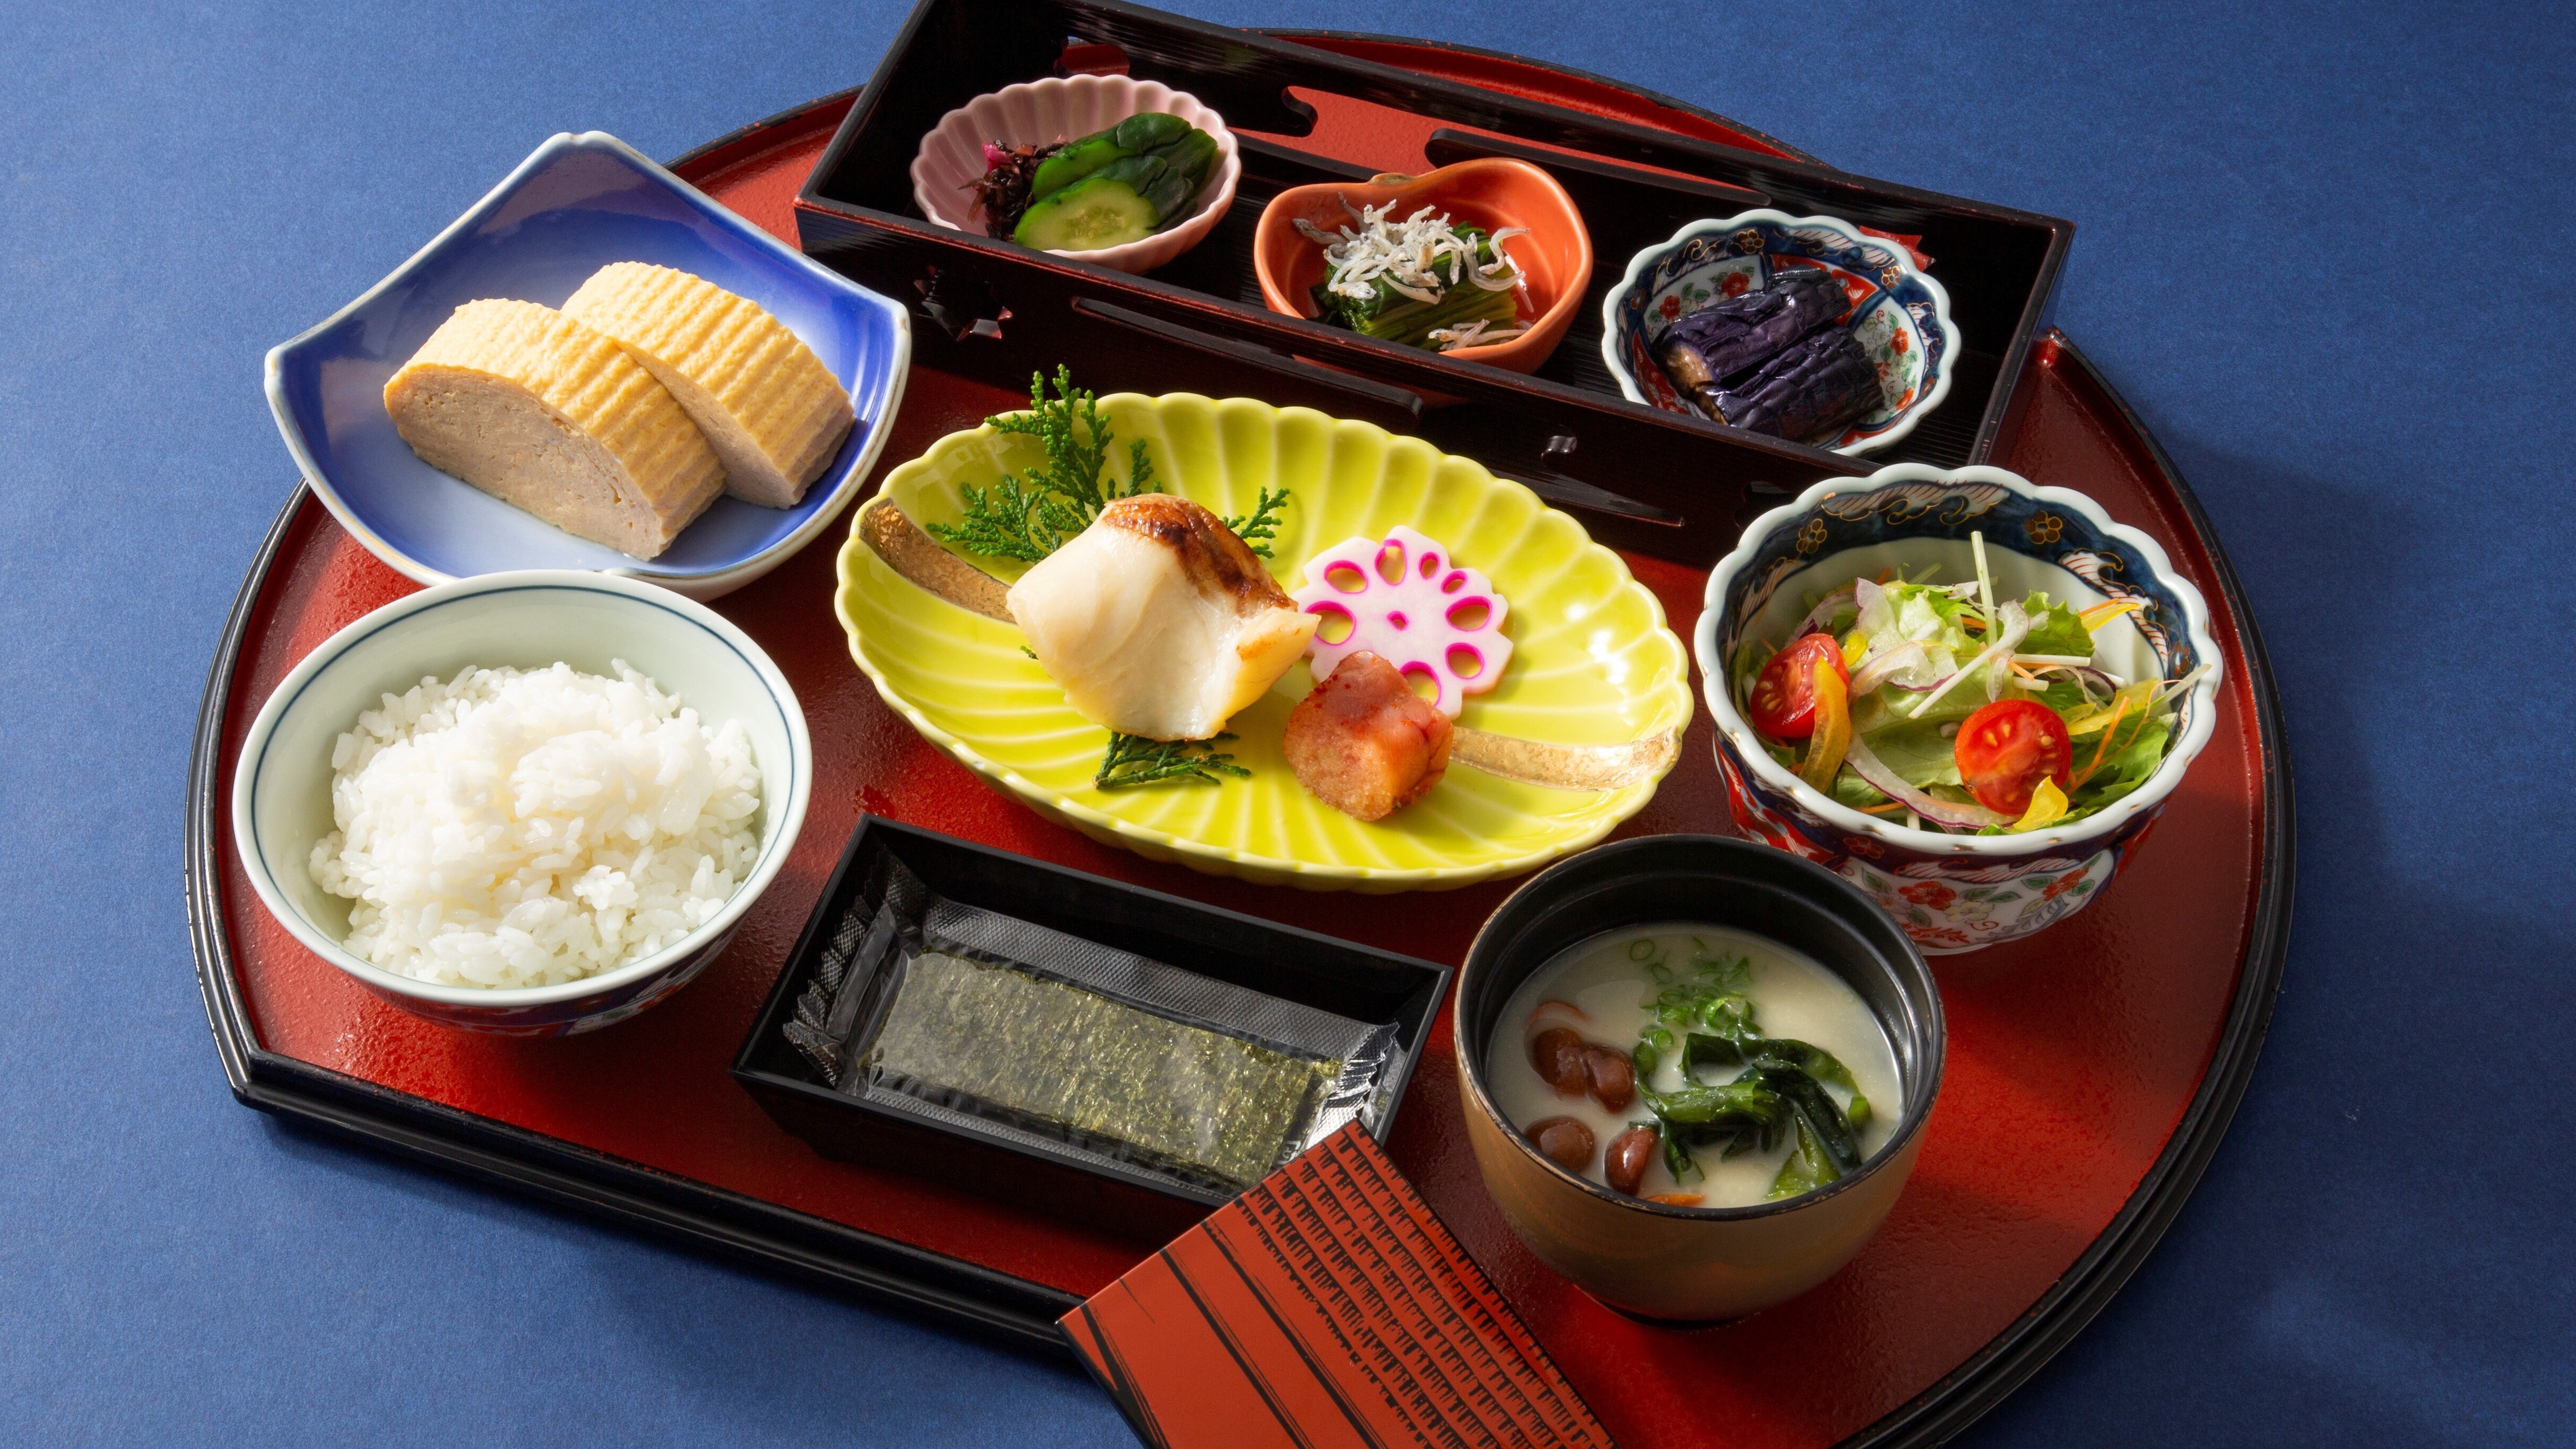 Breakfast Japanese set meal